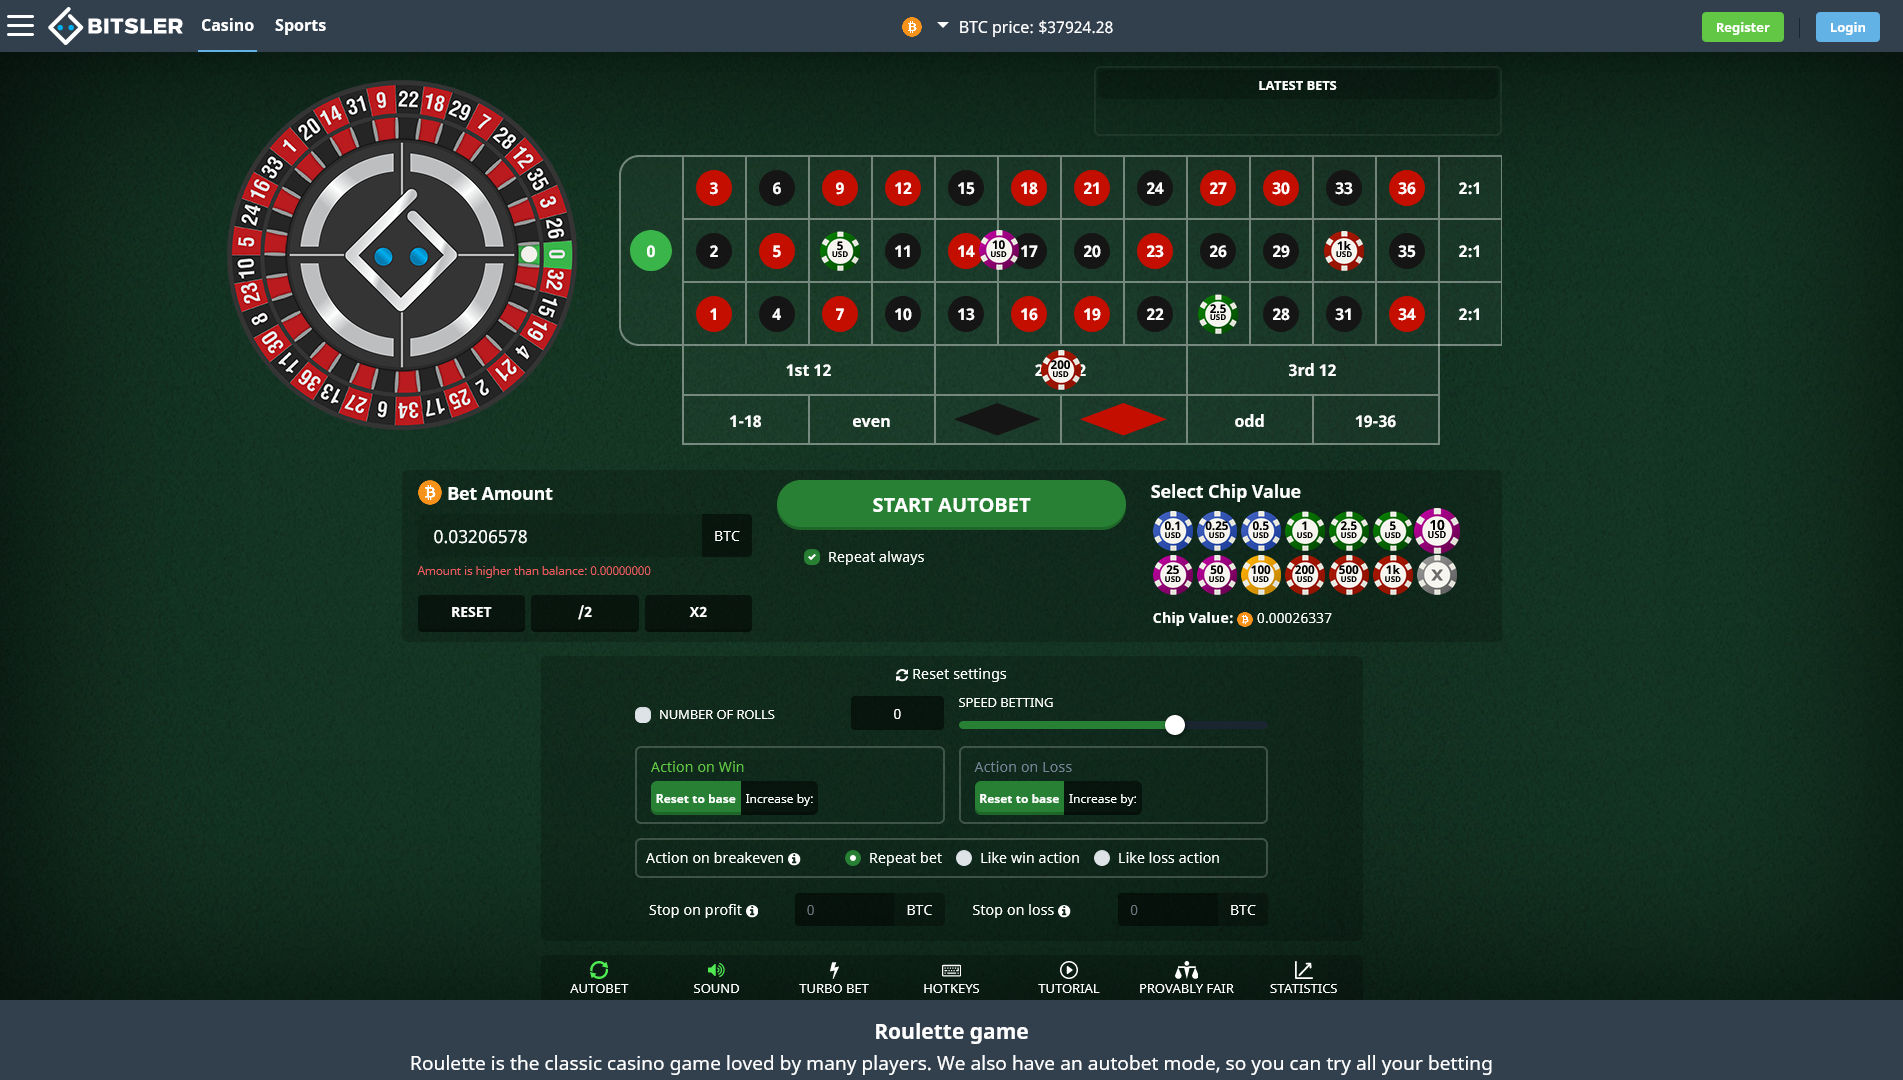 Bitsler Casino Casino Games